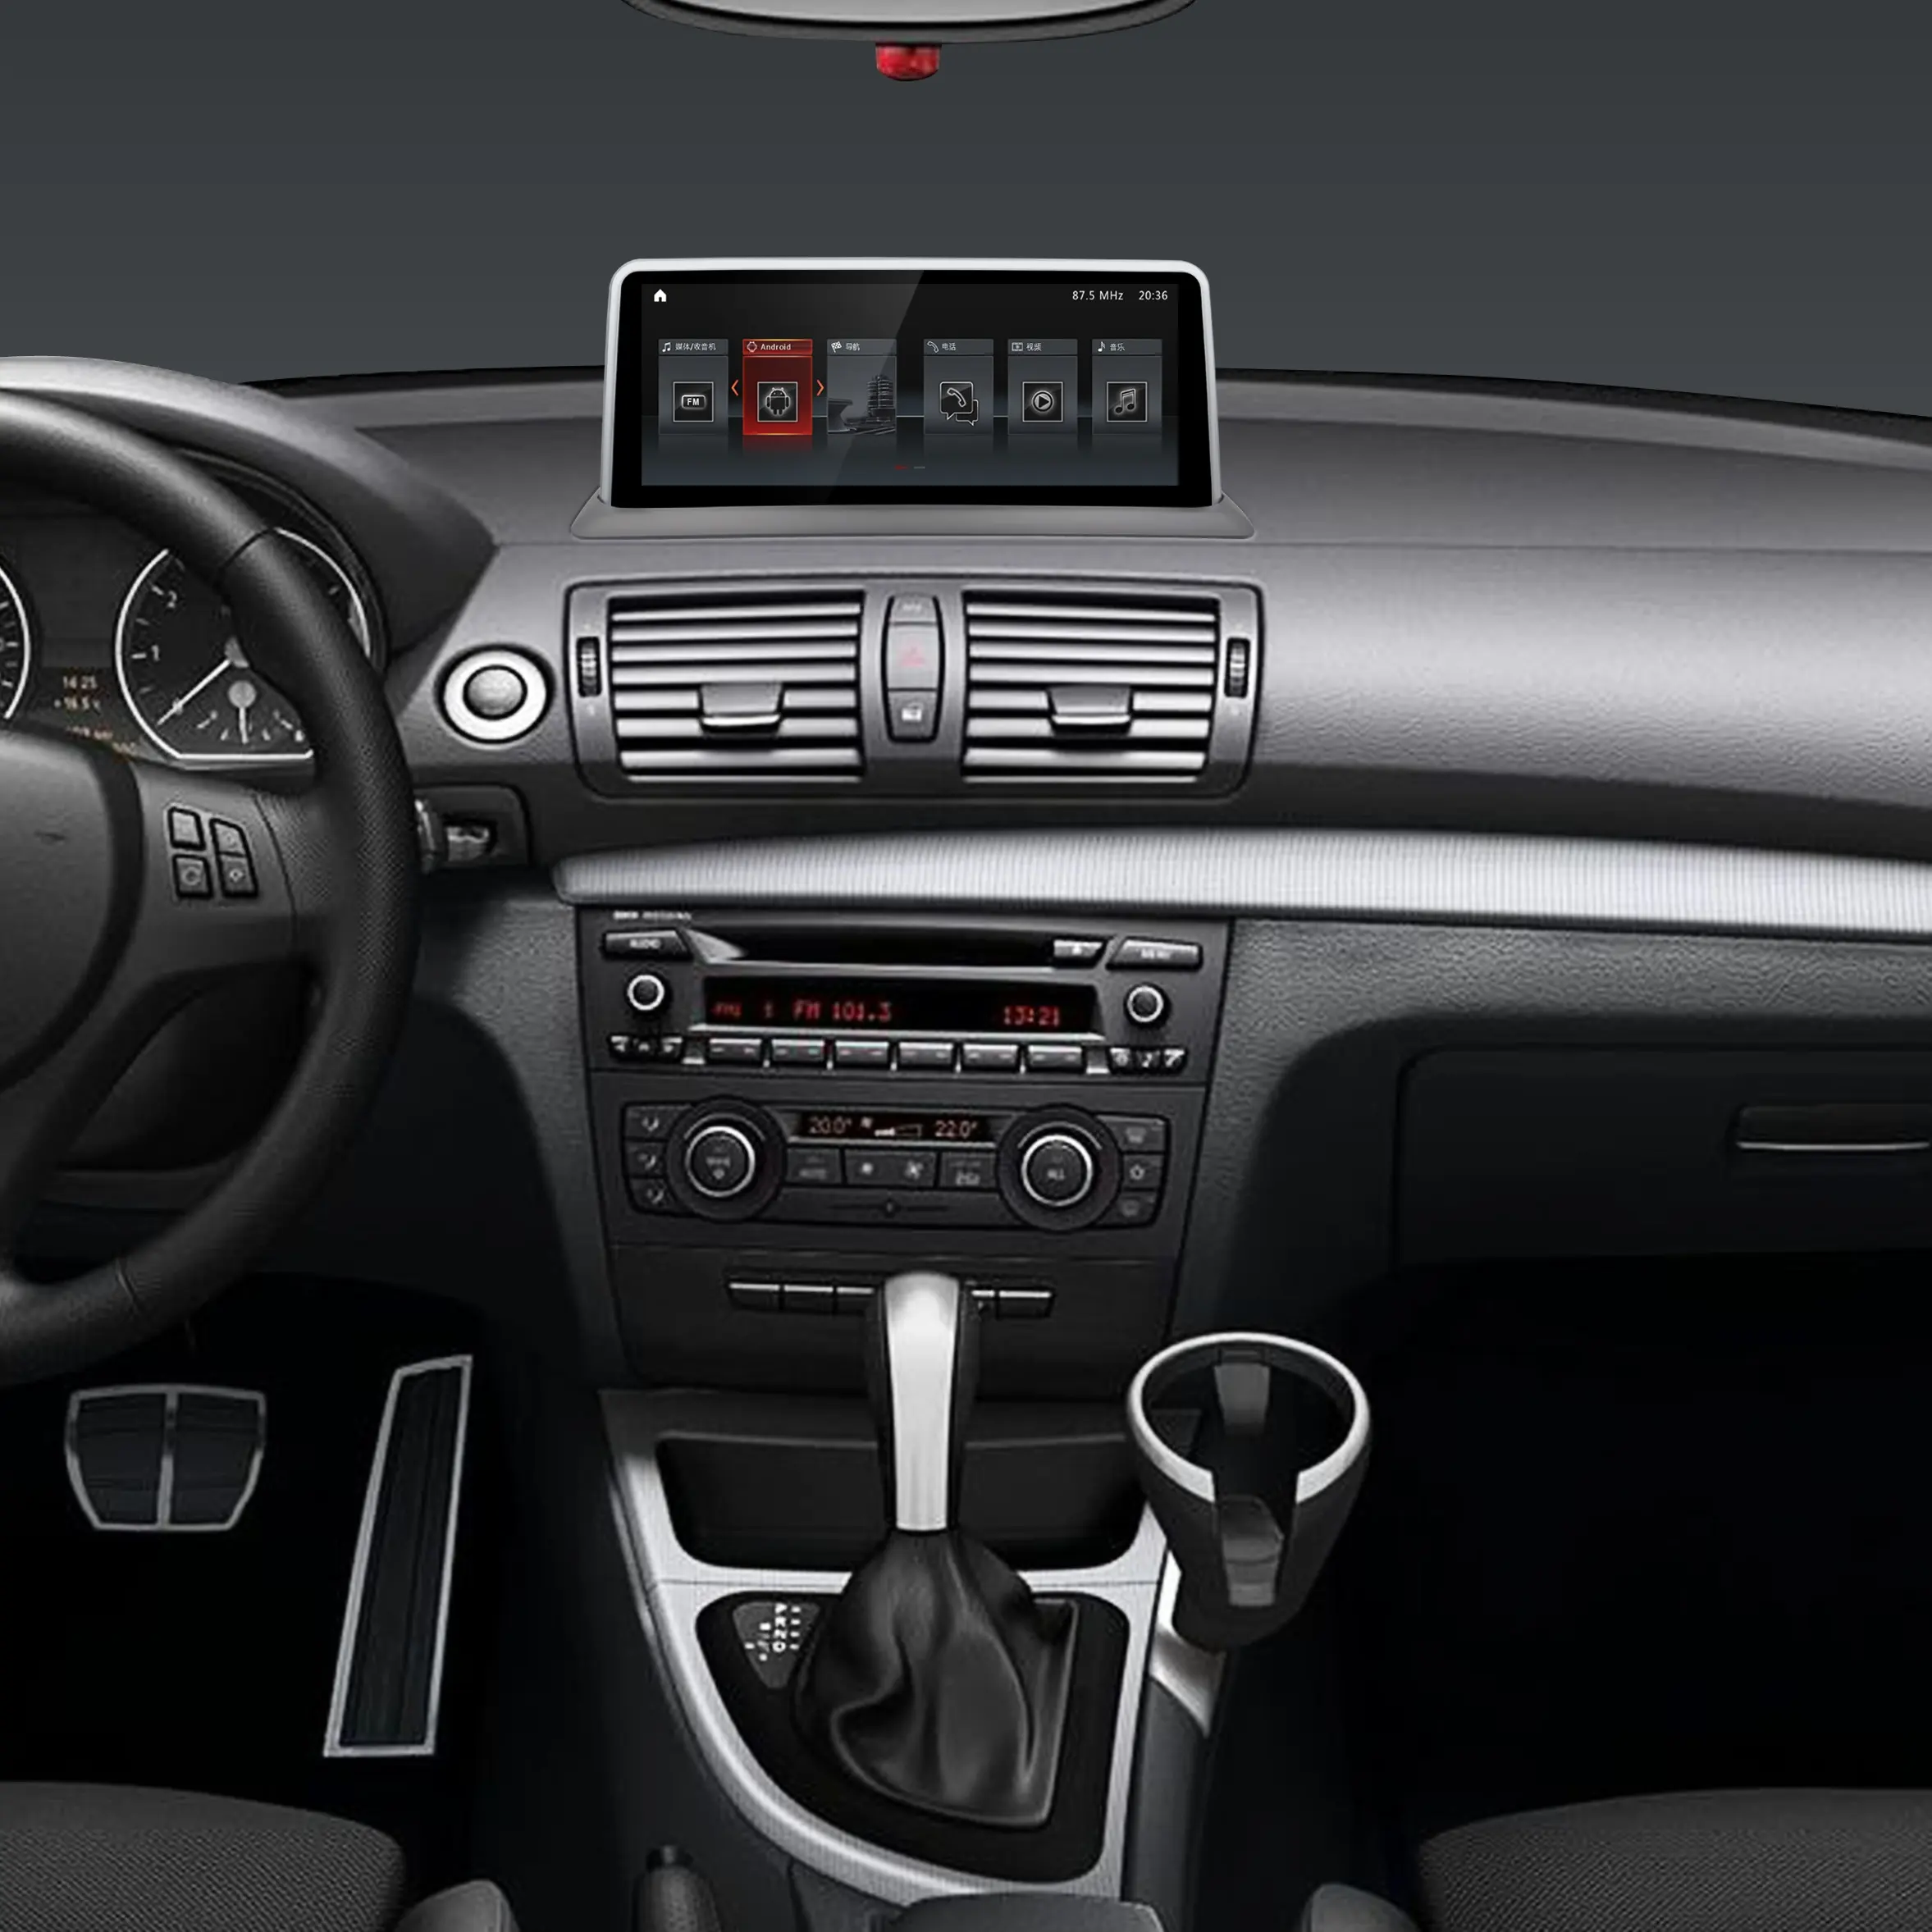 UPSZTEC 10.25 "자동차 플레이어 안드로이드 13 IPS 화면 자동 라디오 내비게이션 BMW 1 시리즈 E87 E81 E82 E88 04-12 CCC CIC 시스템